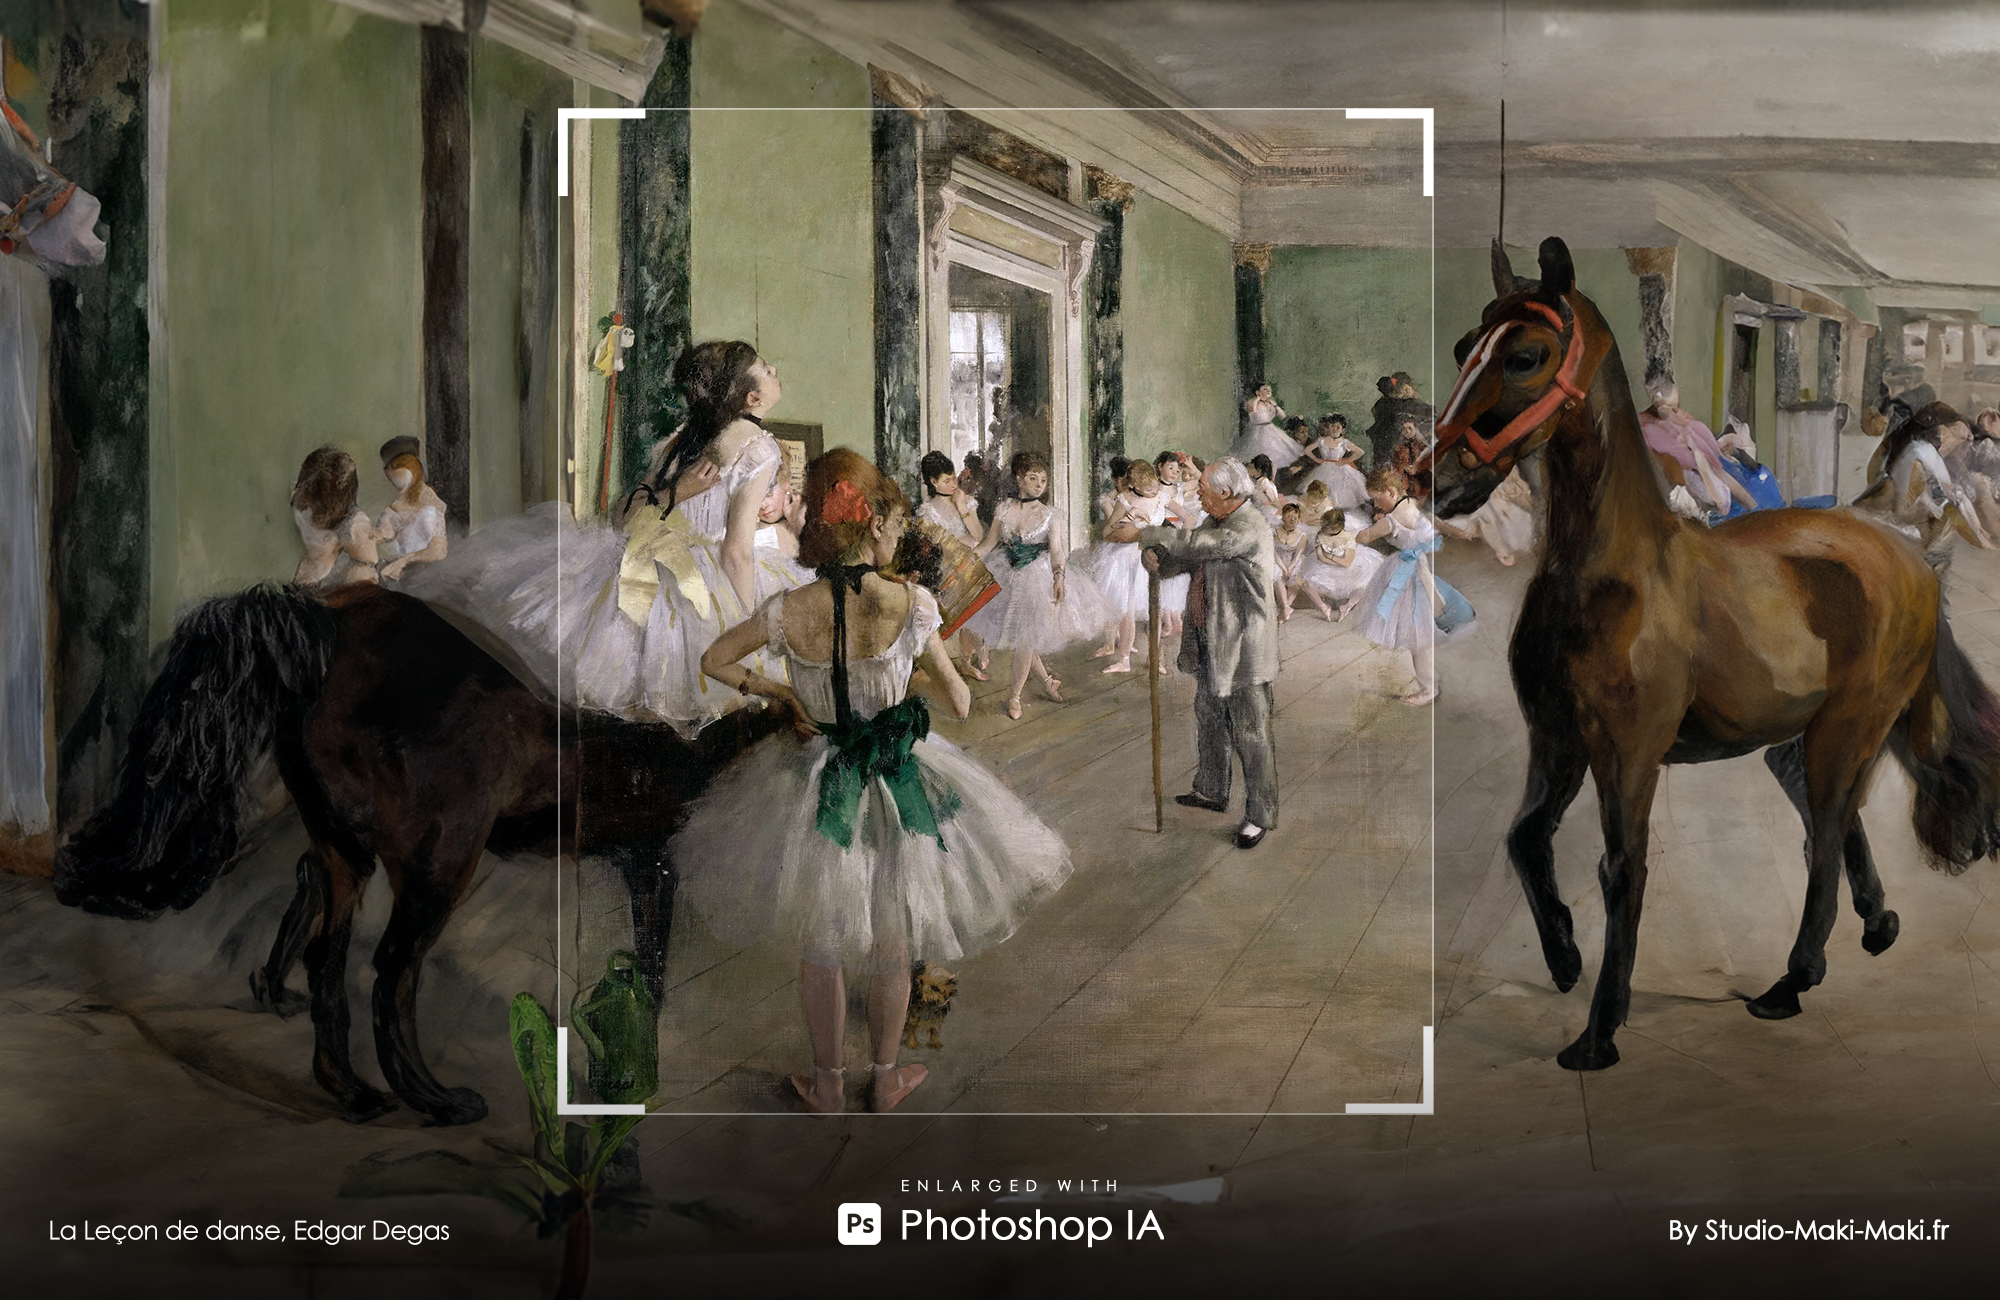 La Leçon de danse, Edgar Degas - Enlarged with Photoshop IA - By Studio Maki Maki